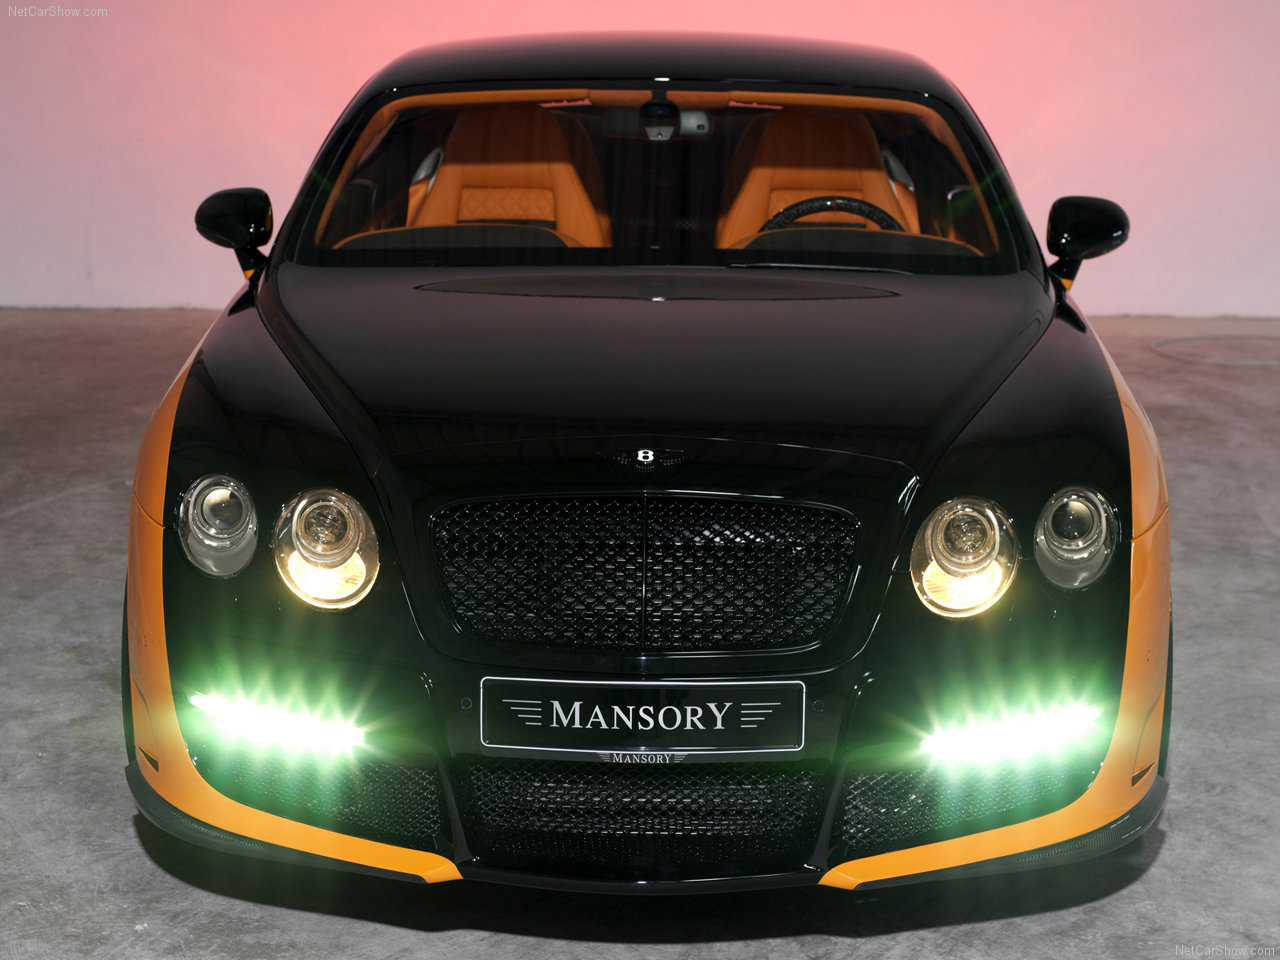 Mansory-Le Mansory 2007 1280x960 wallpaper 05